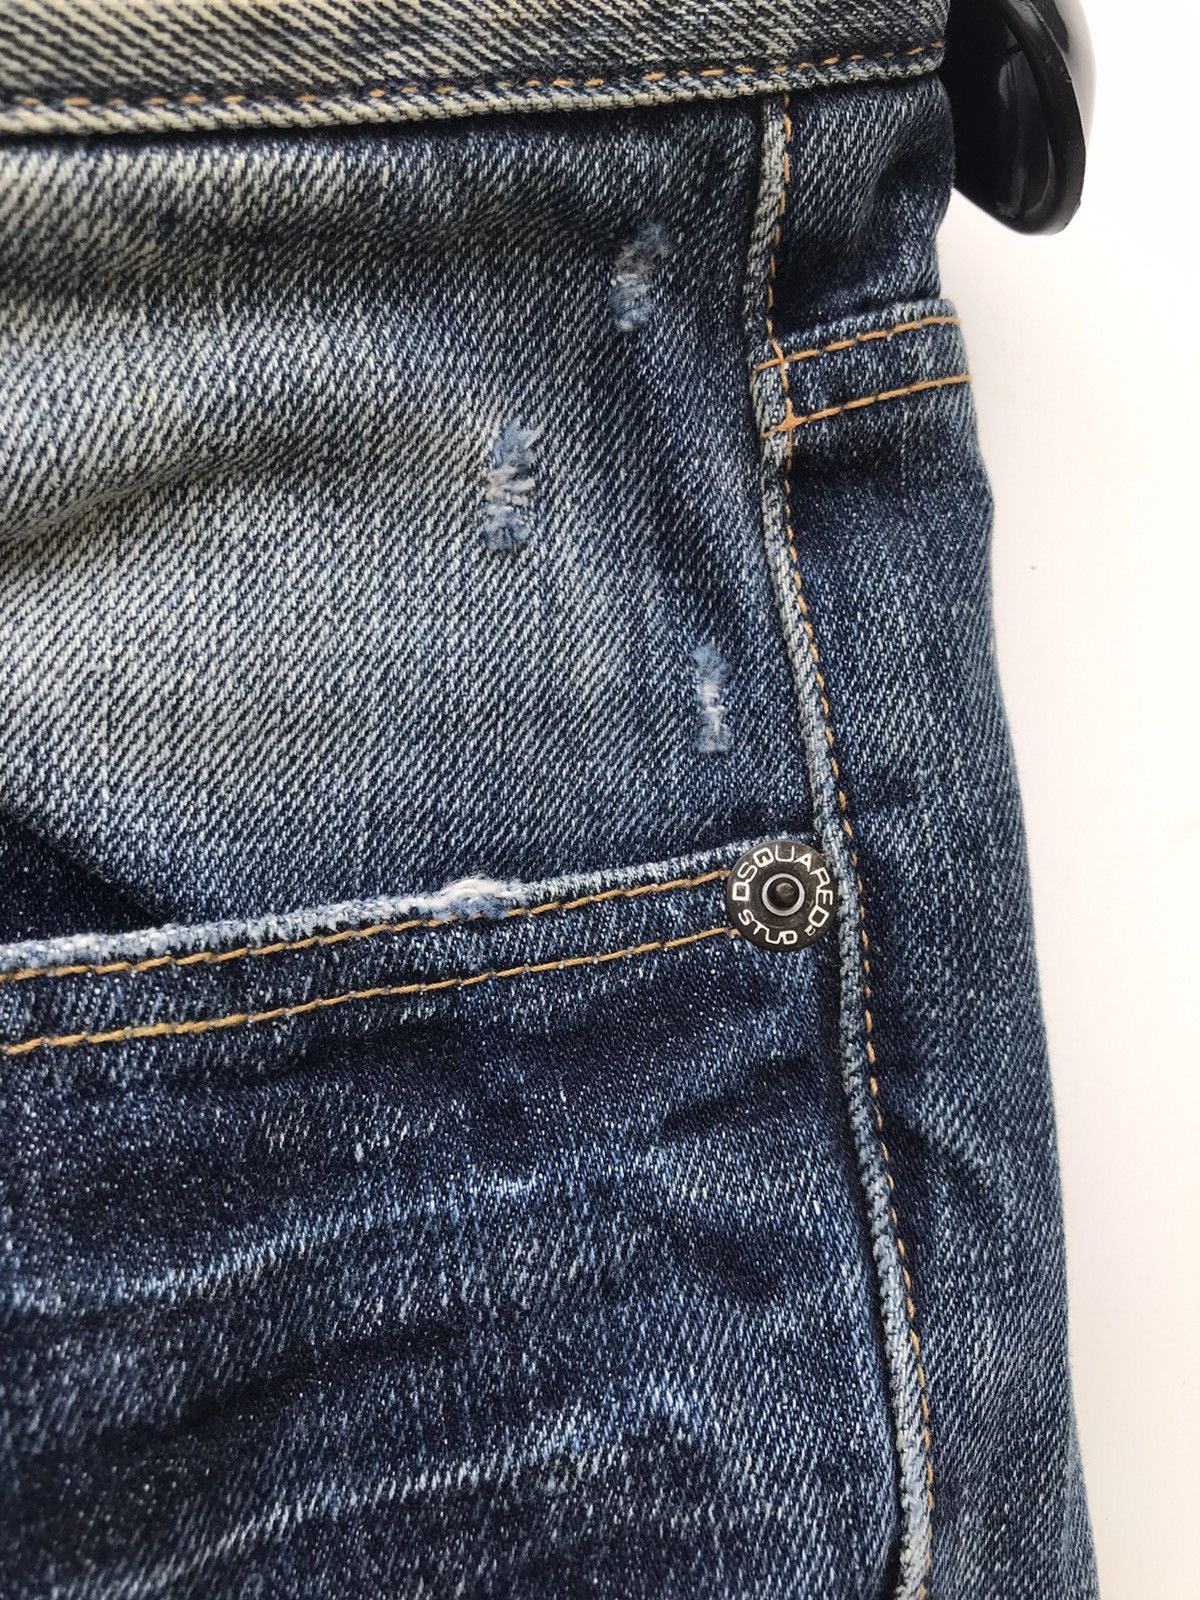 Vintage Dsquared2 Denim Jeans Rare Design - 12